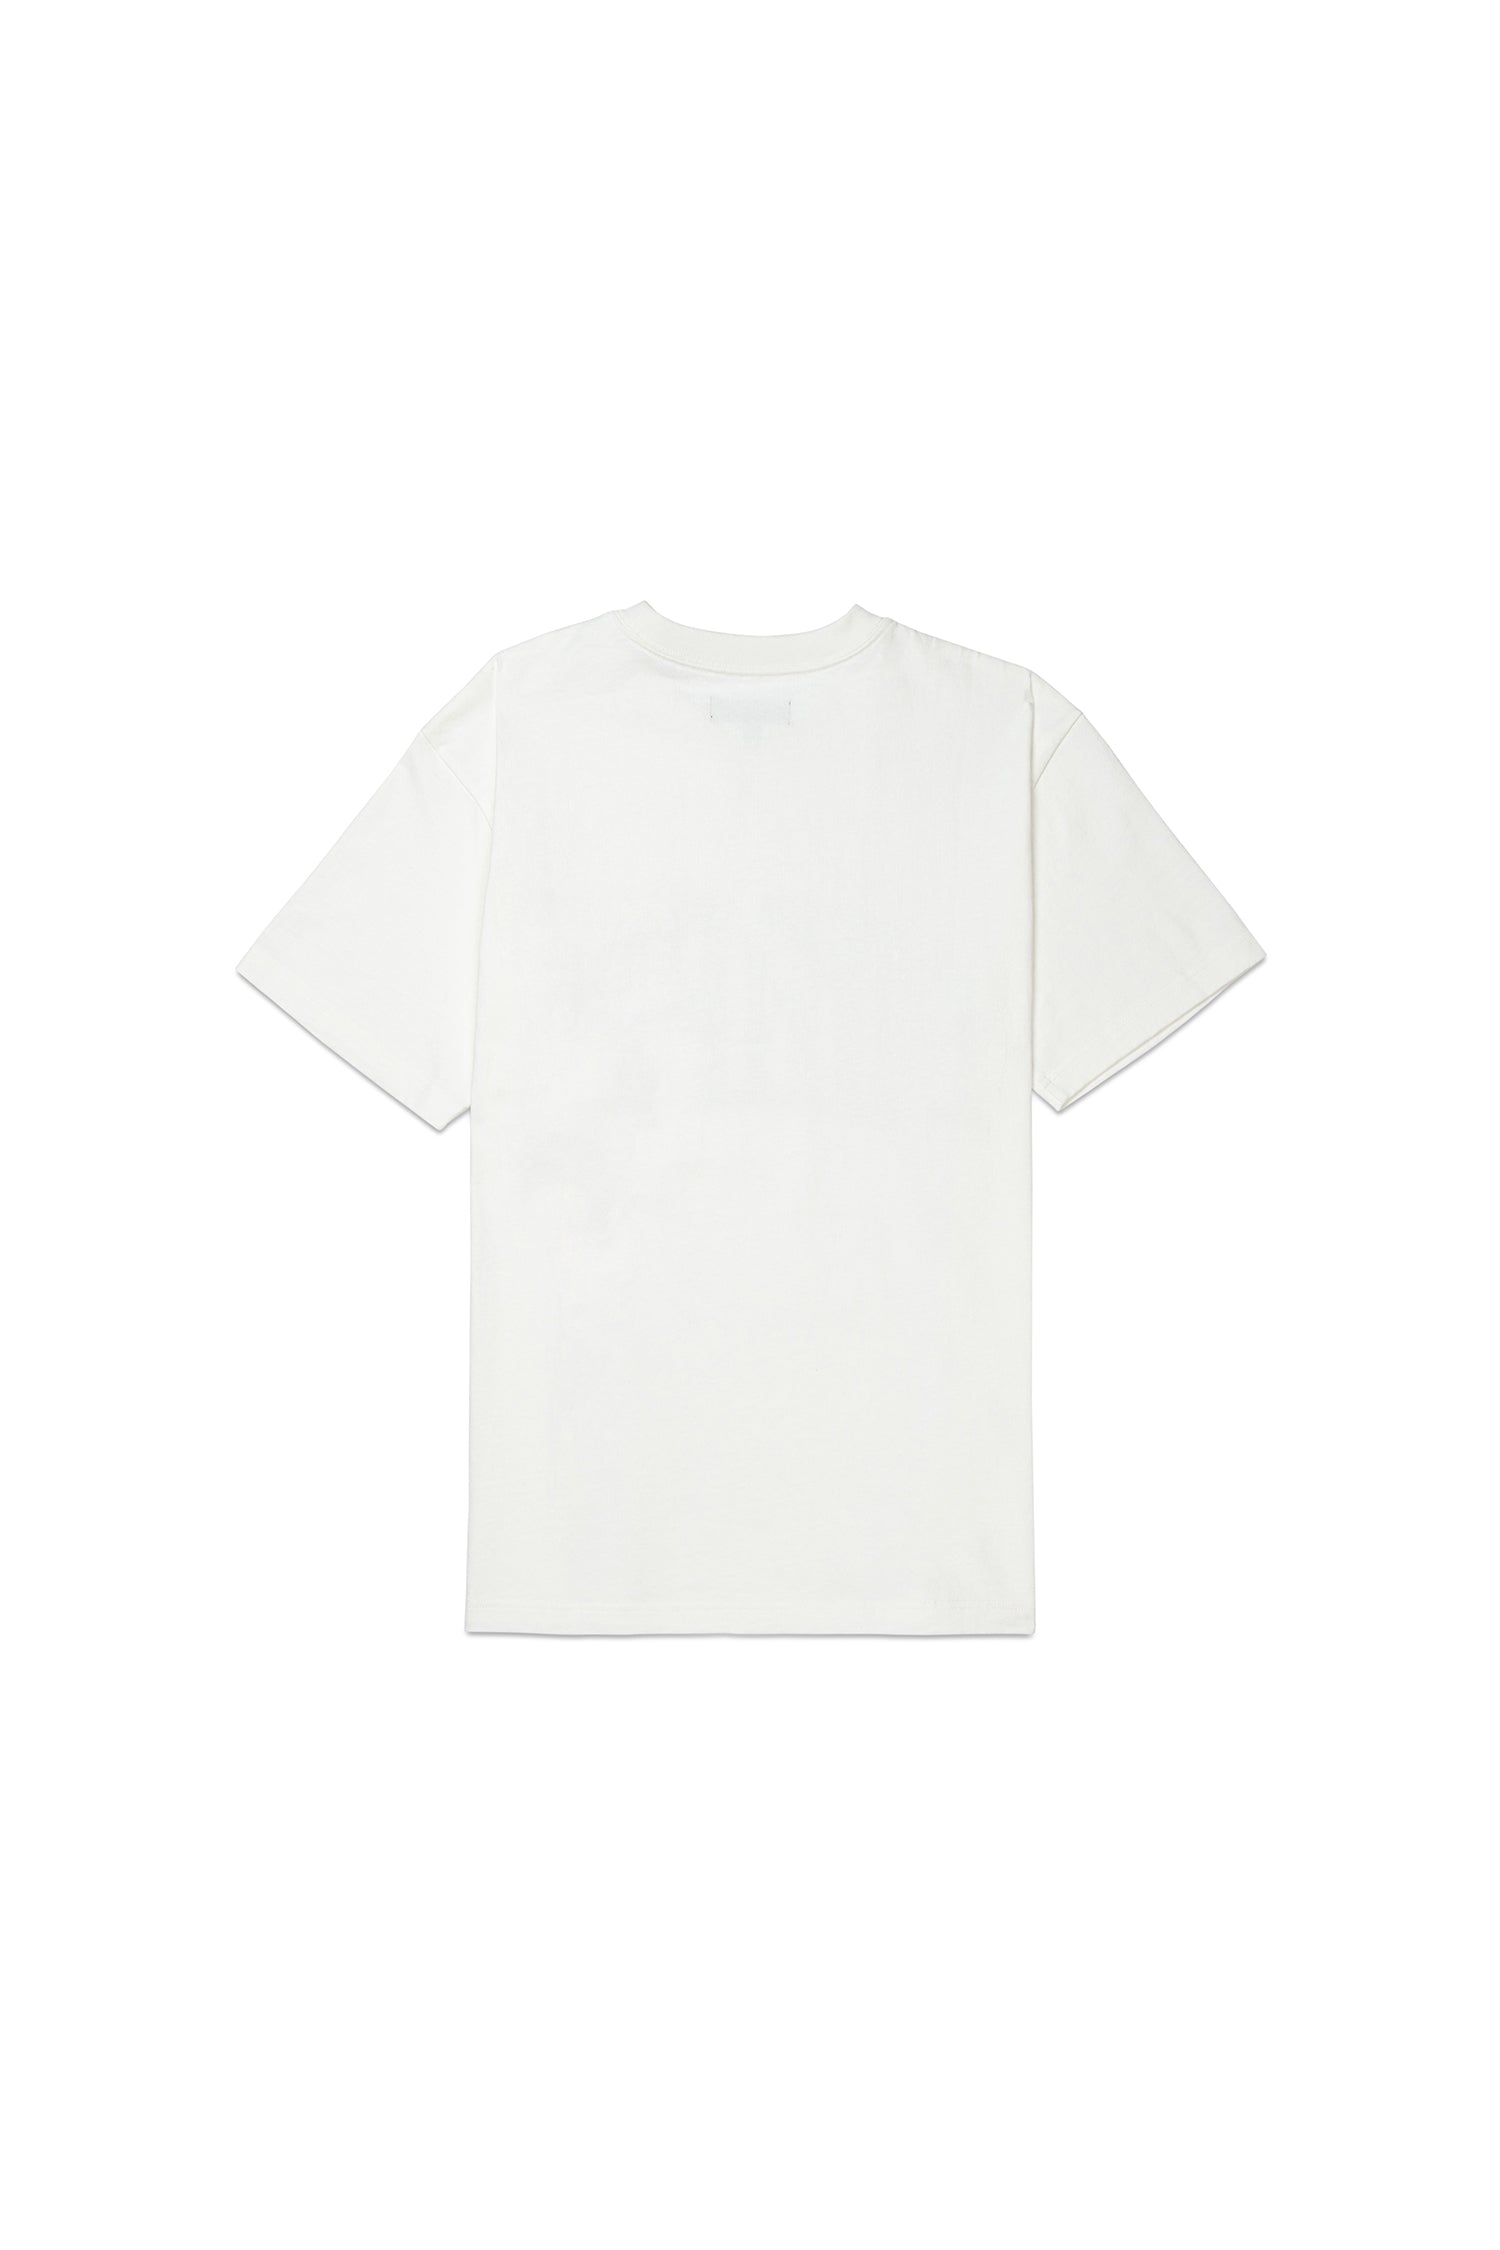 PURPLE BRAND P117 Collegiate T-Shirt (White)